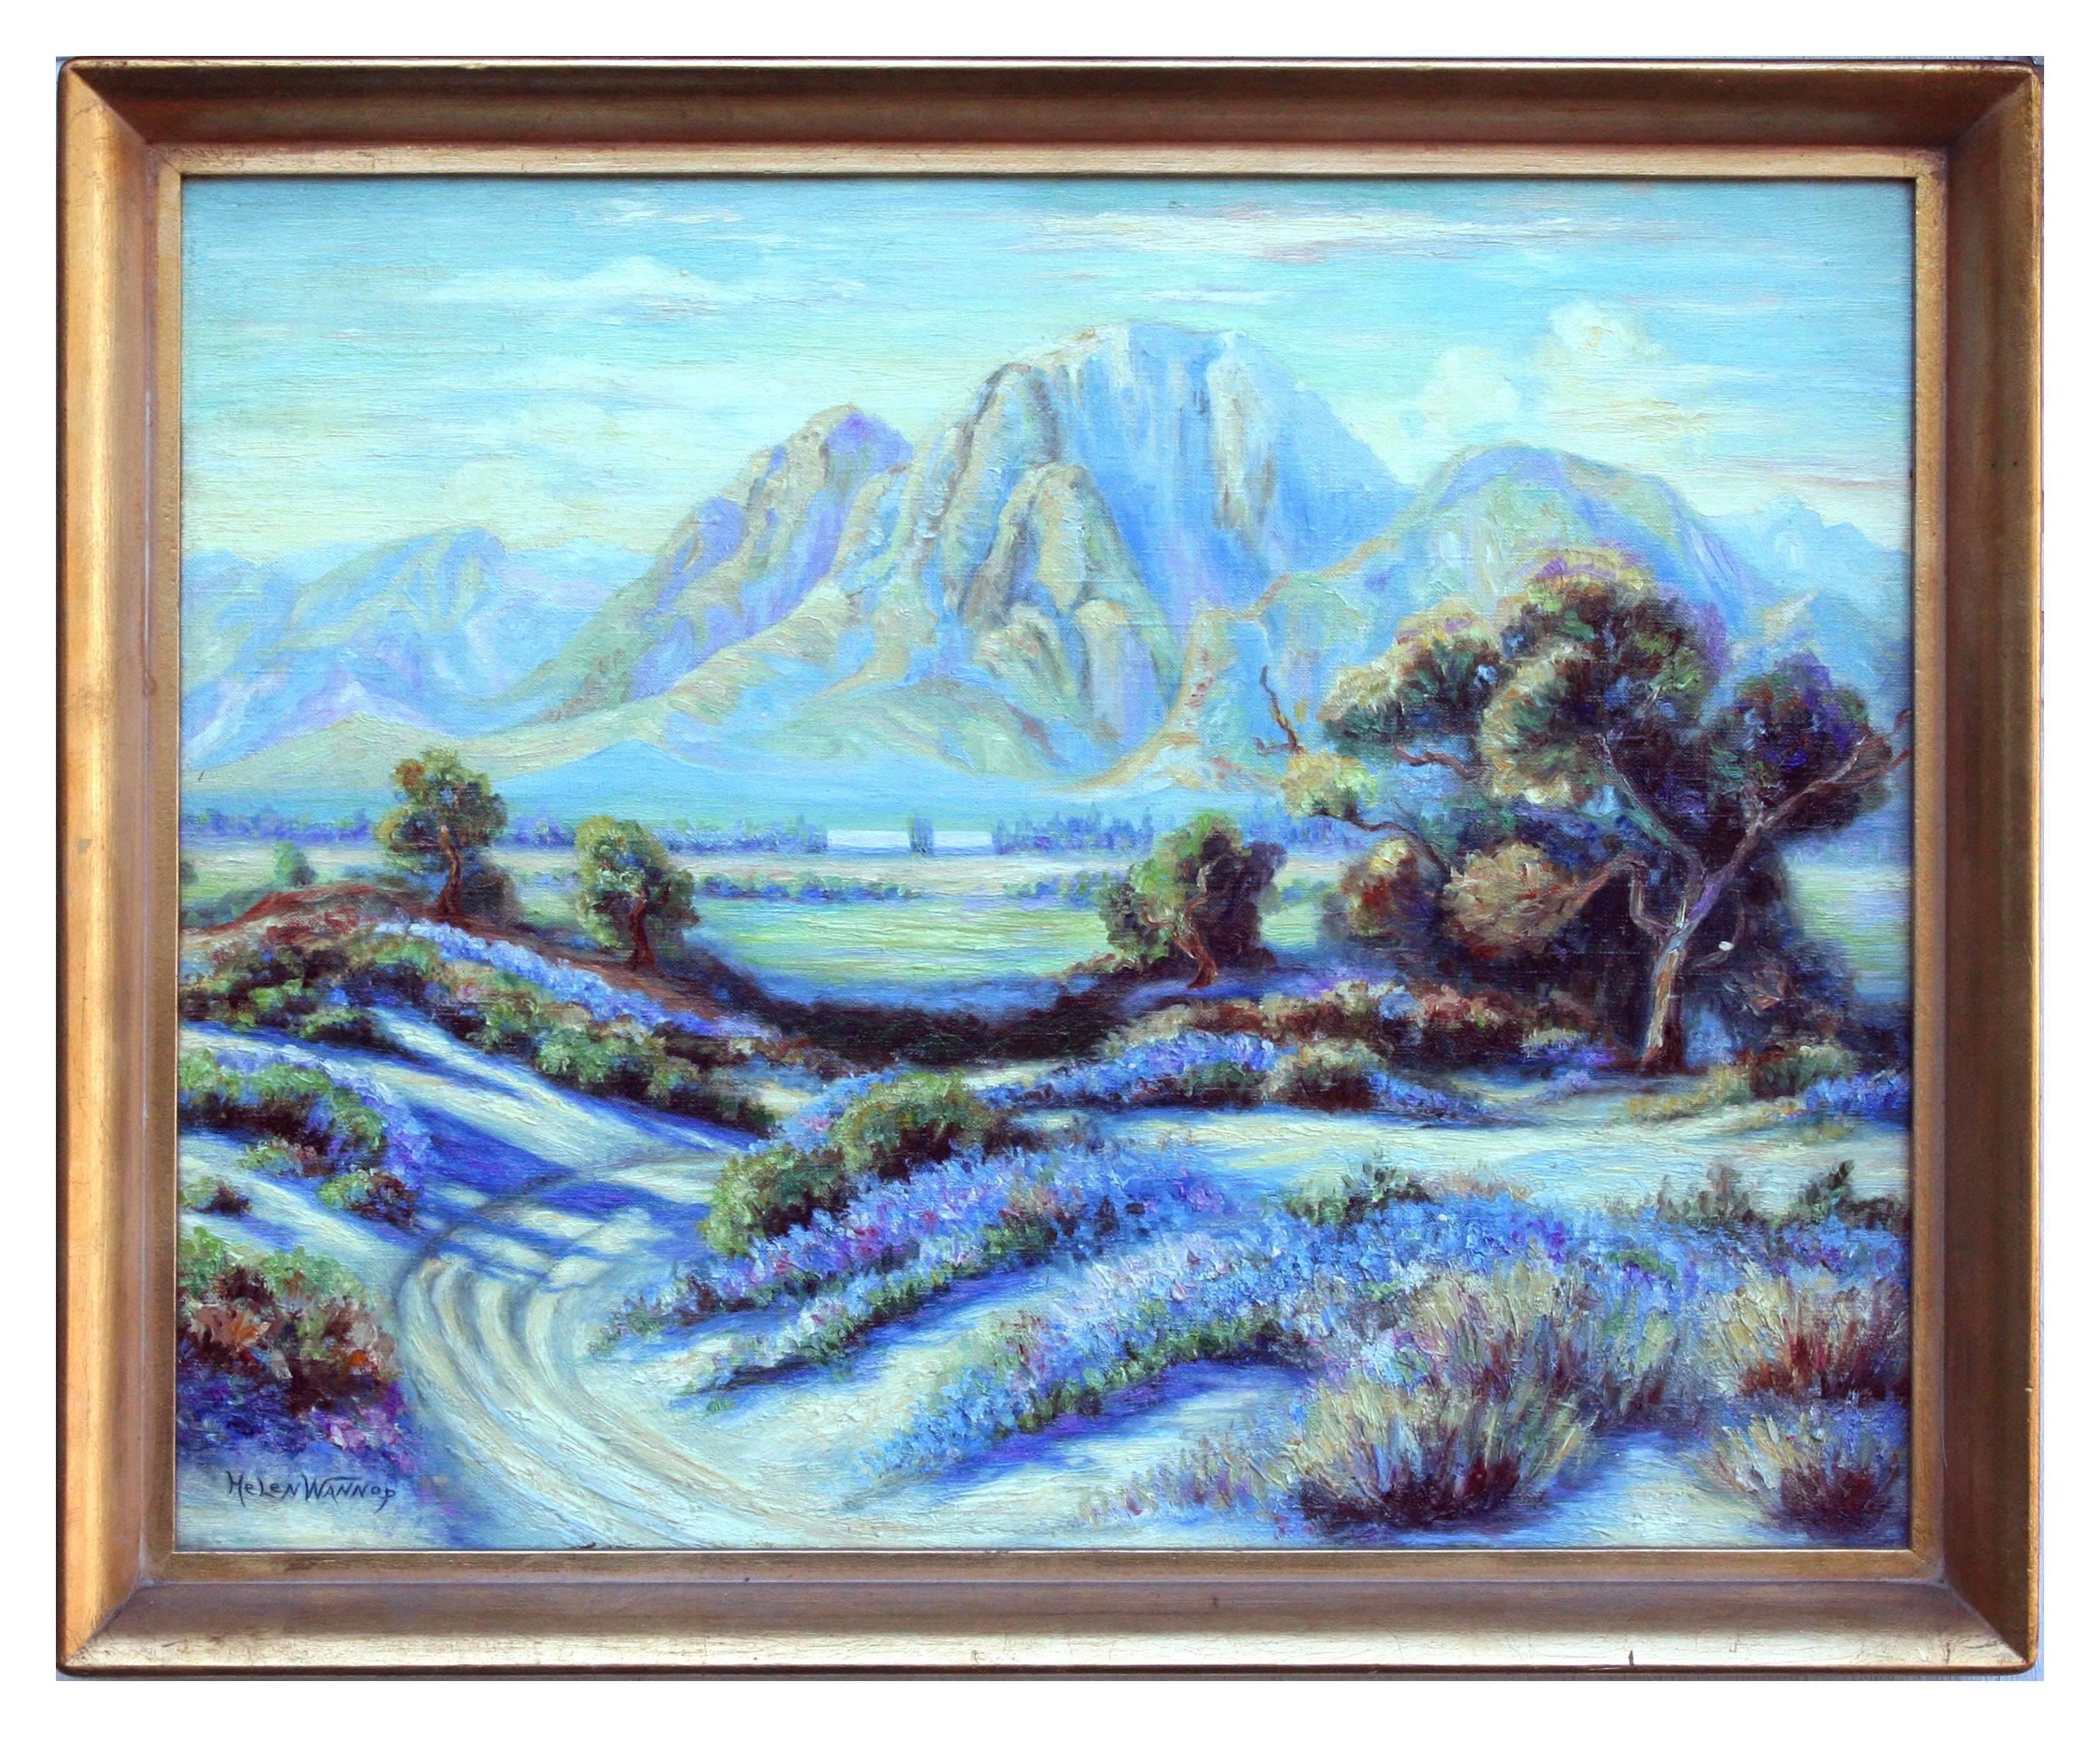 Helen Wannop Landscape Painting - 1930's Palm Springs Desert in Spring Landscape Original Oil Painting